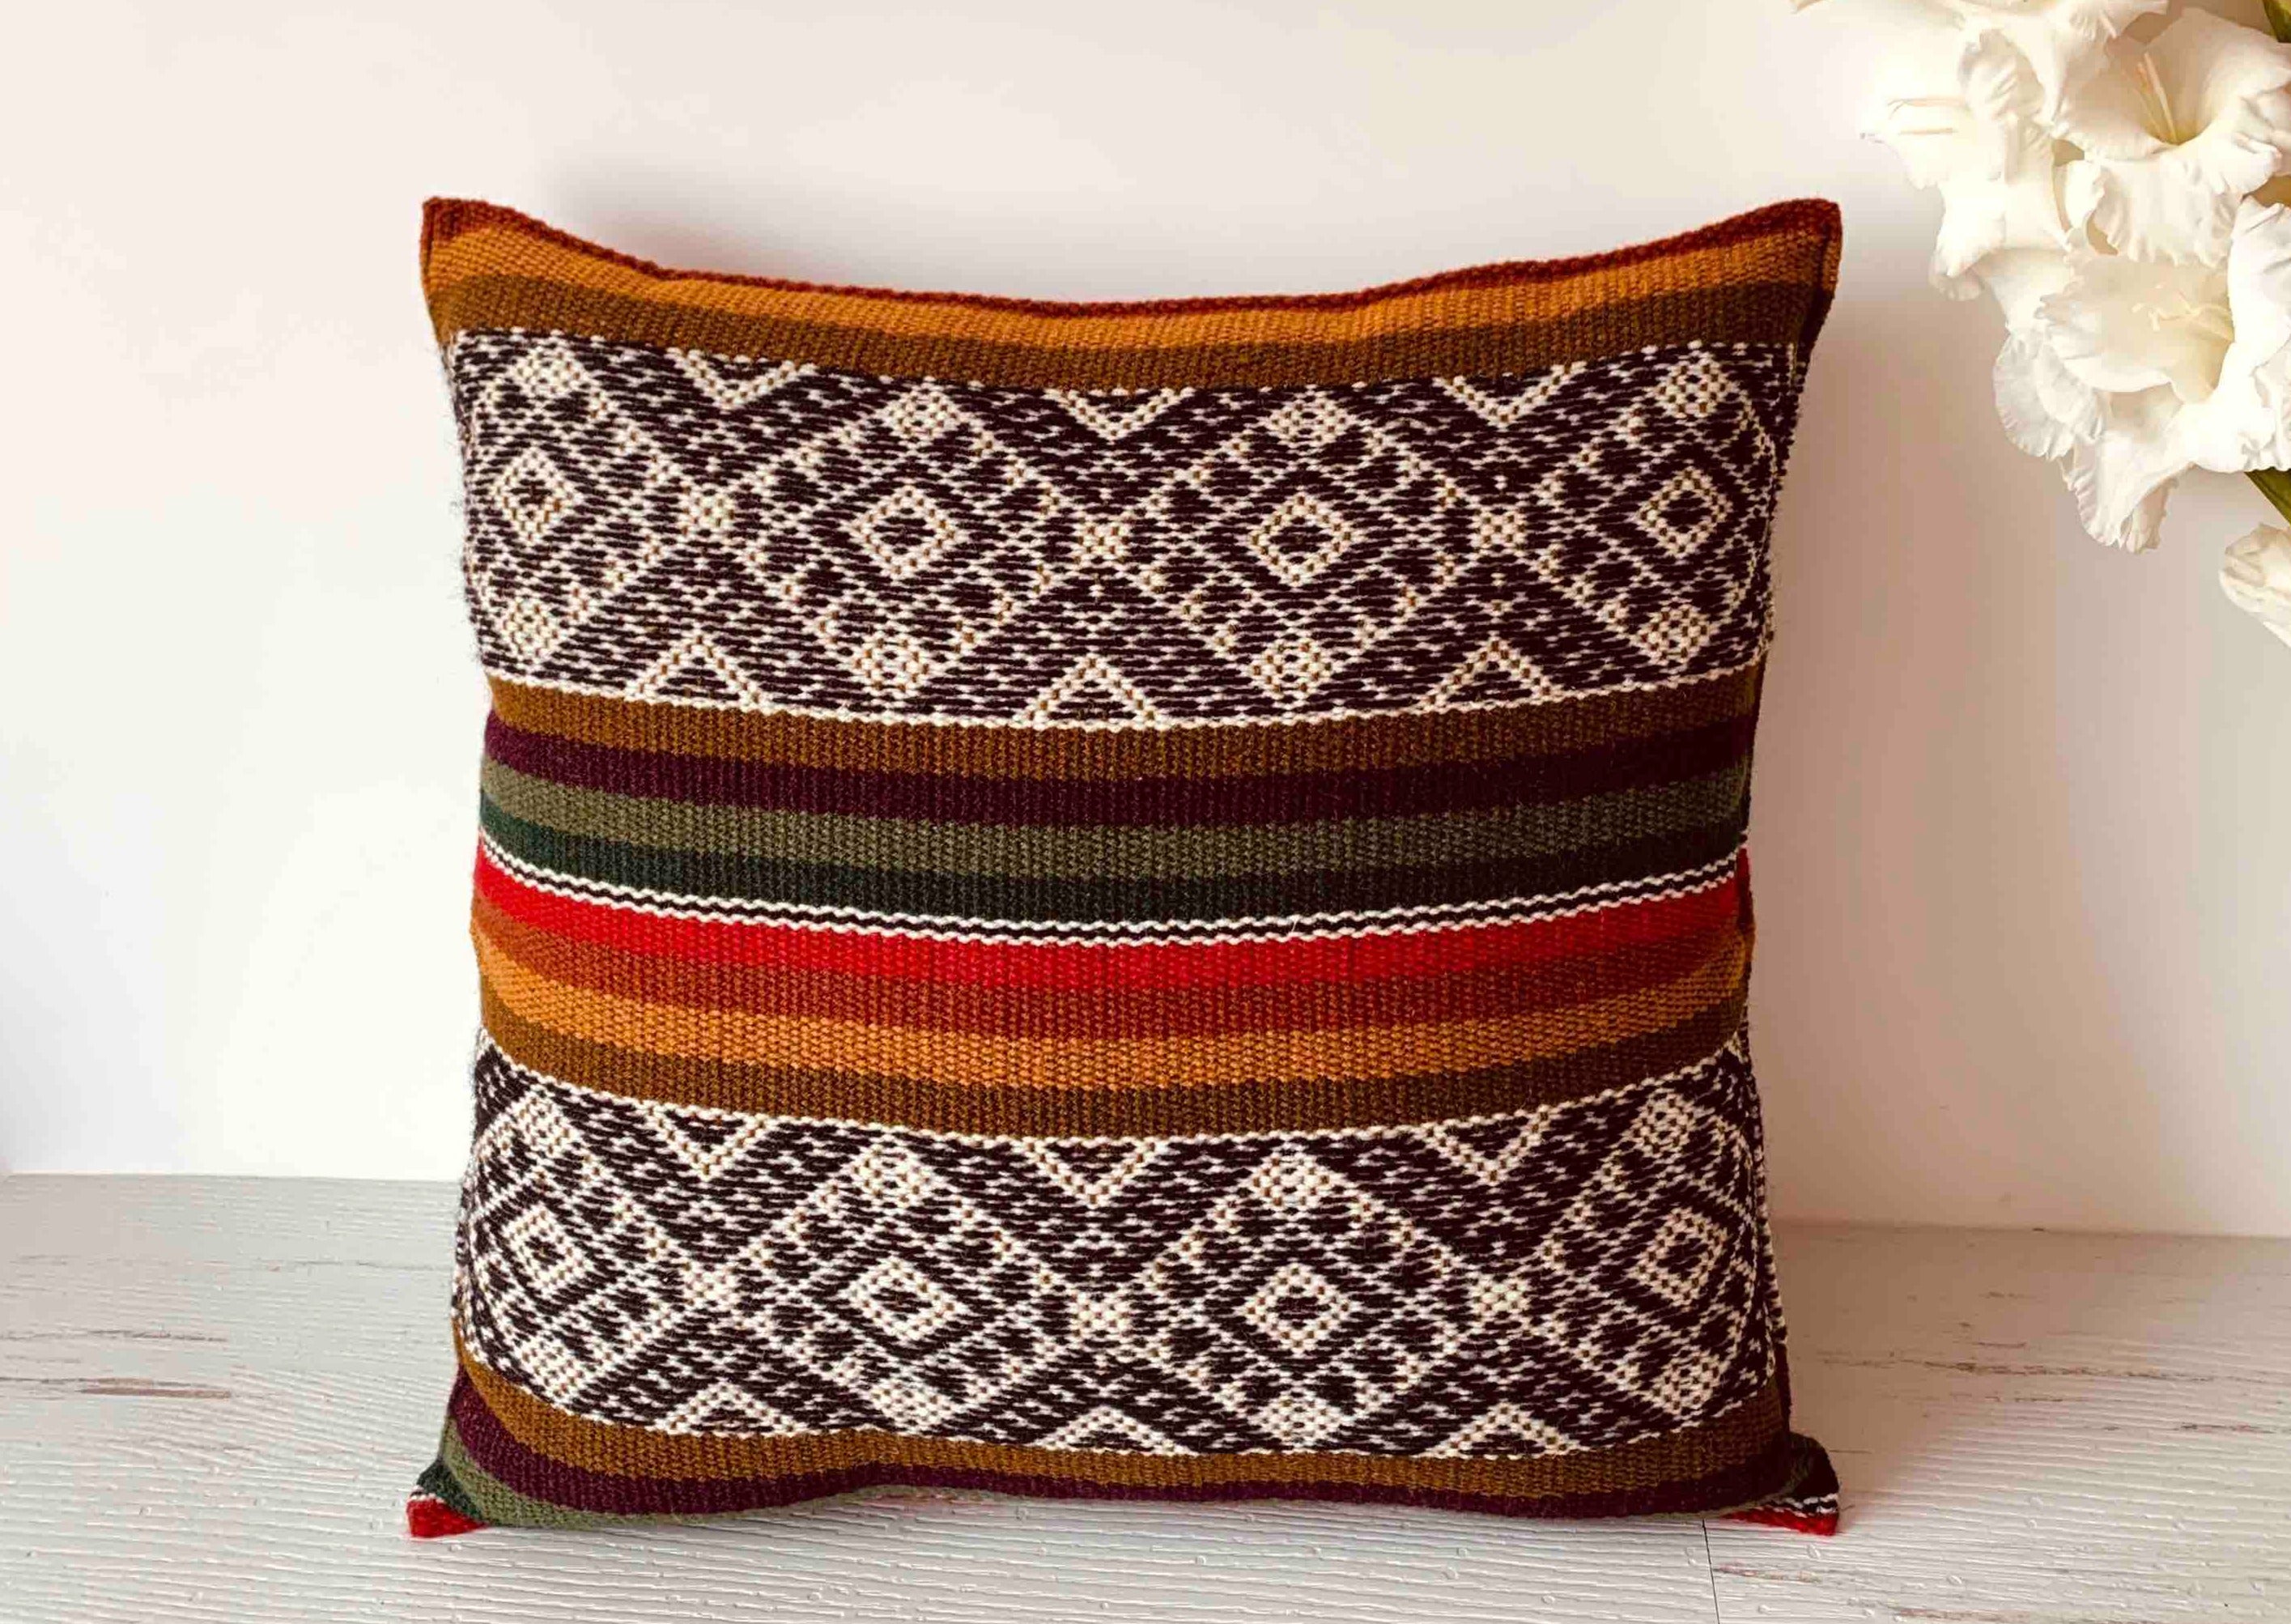 Handmade Peruvian Decorative Pillow Cover